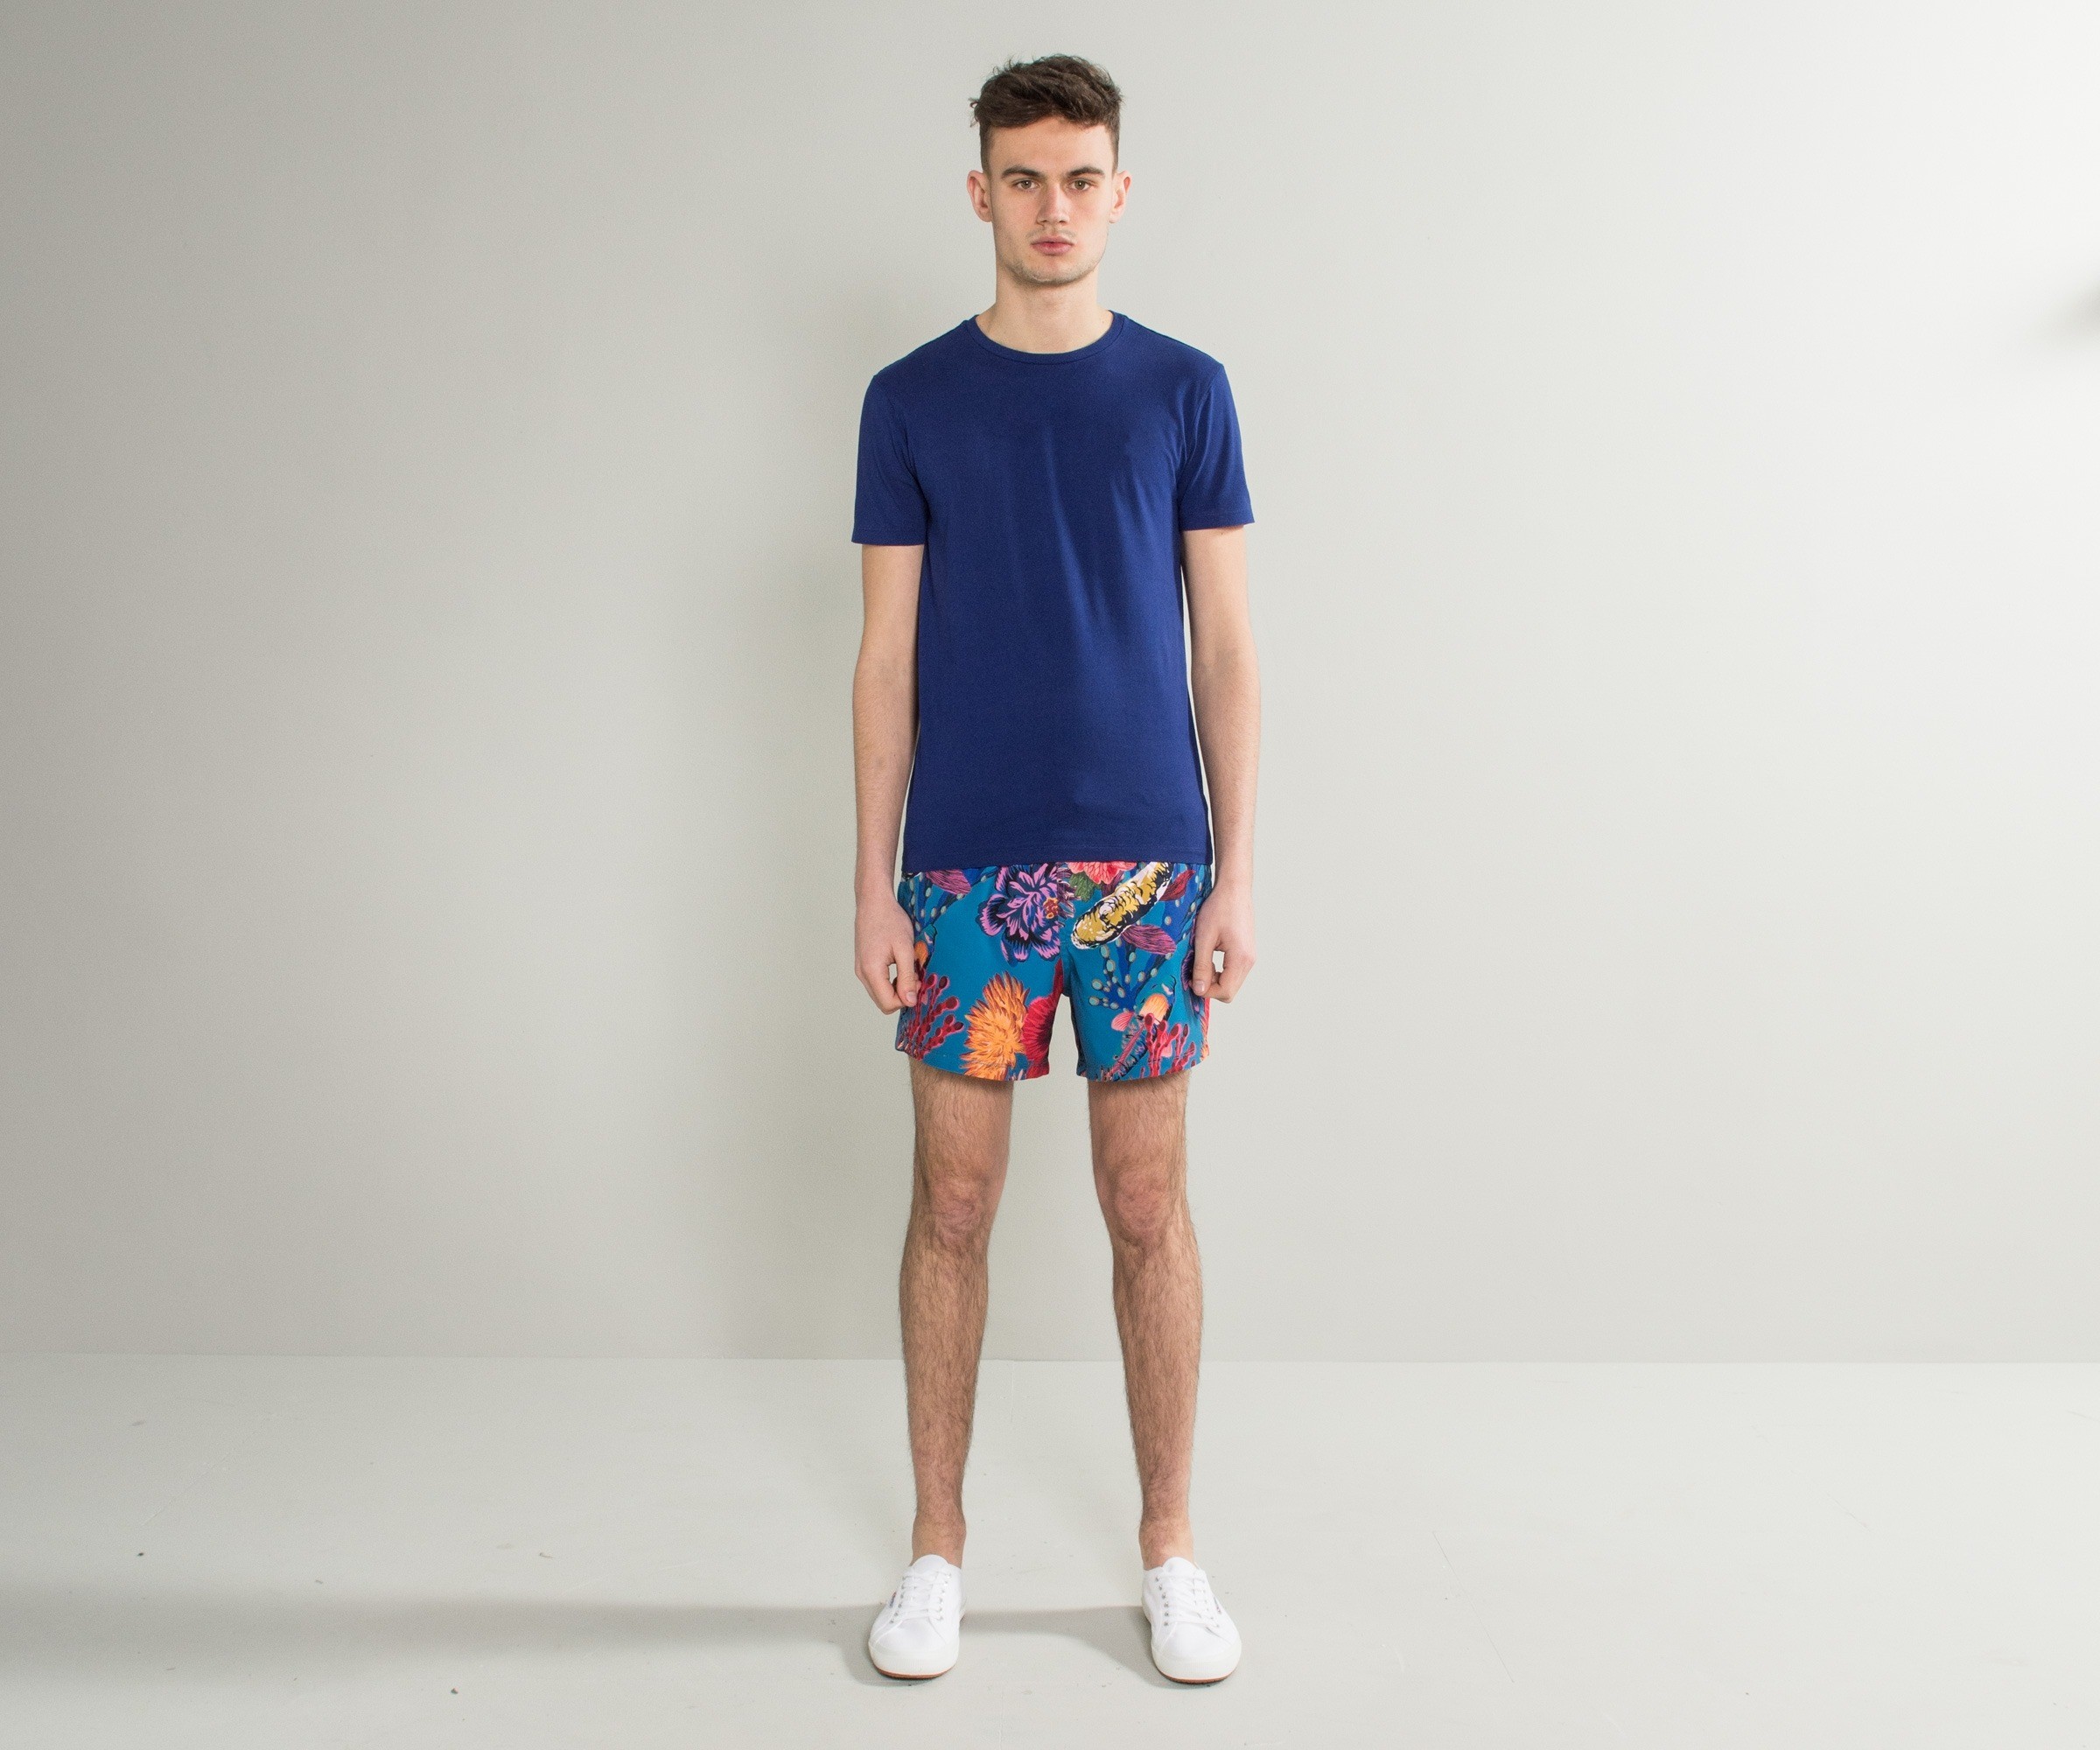 Paul Smith Swimwear 'Ocean' Swim Shorts Turquoise